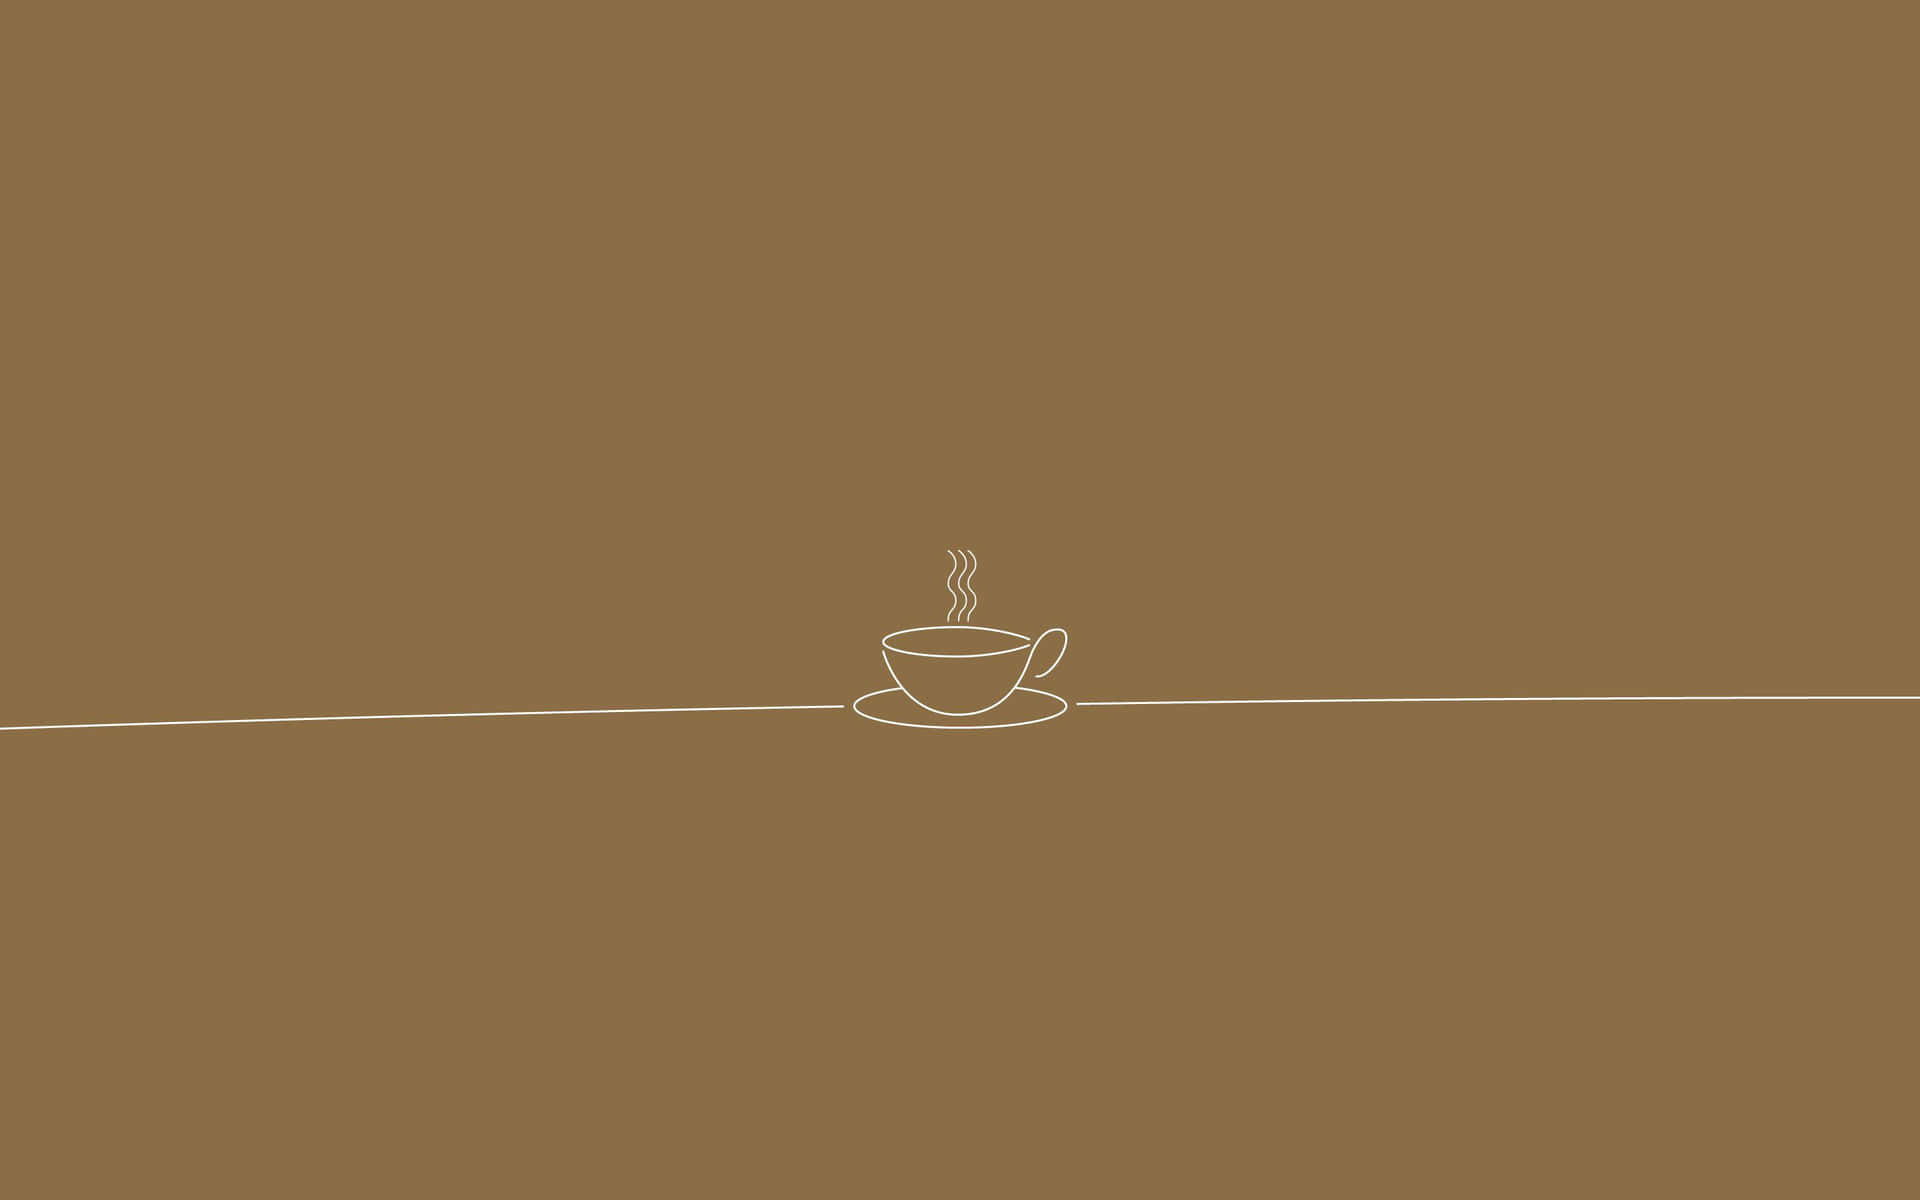 Minimalist Coffee Cup Design Wallpaper